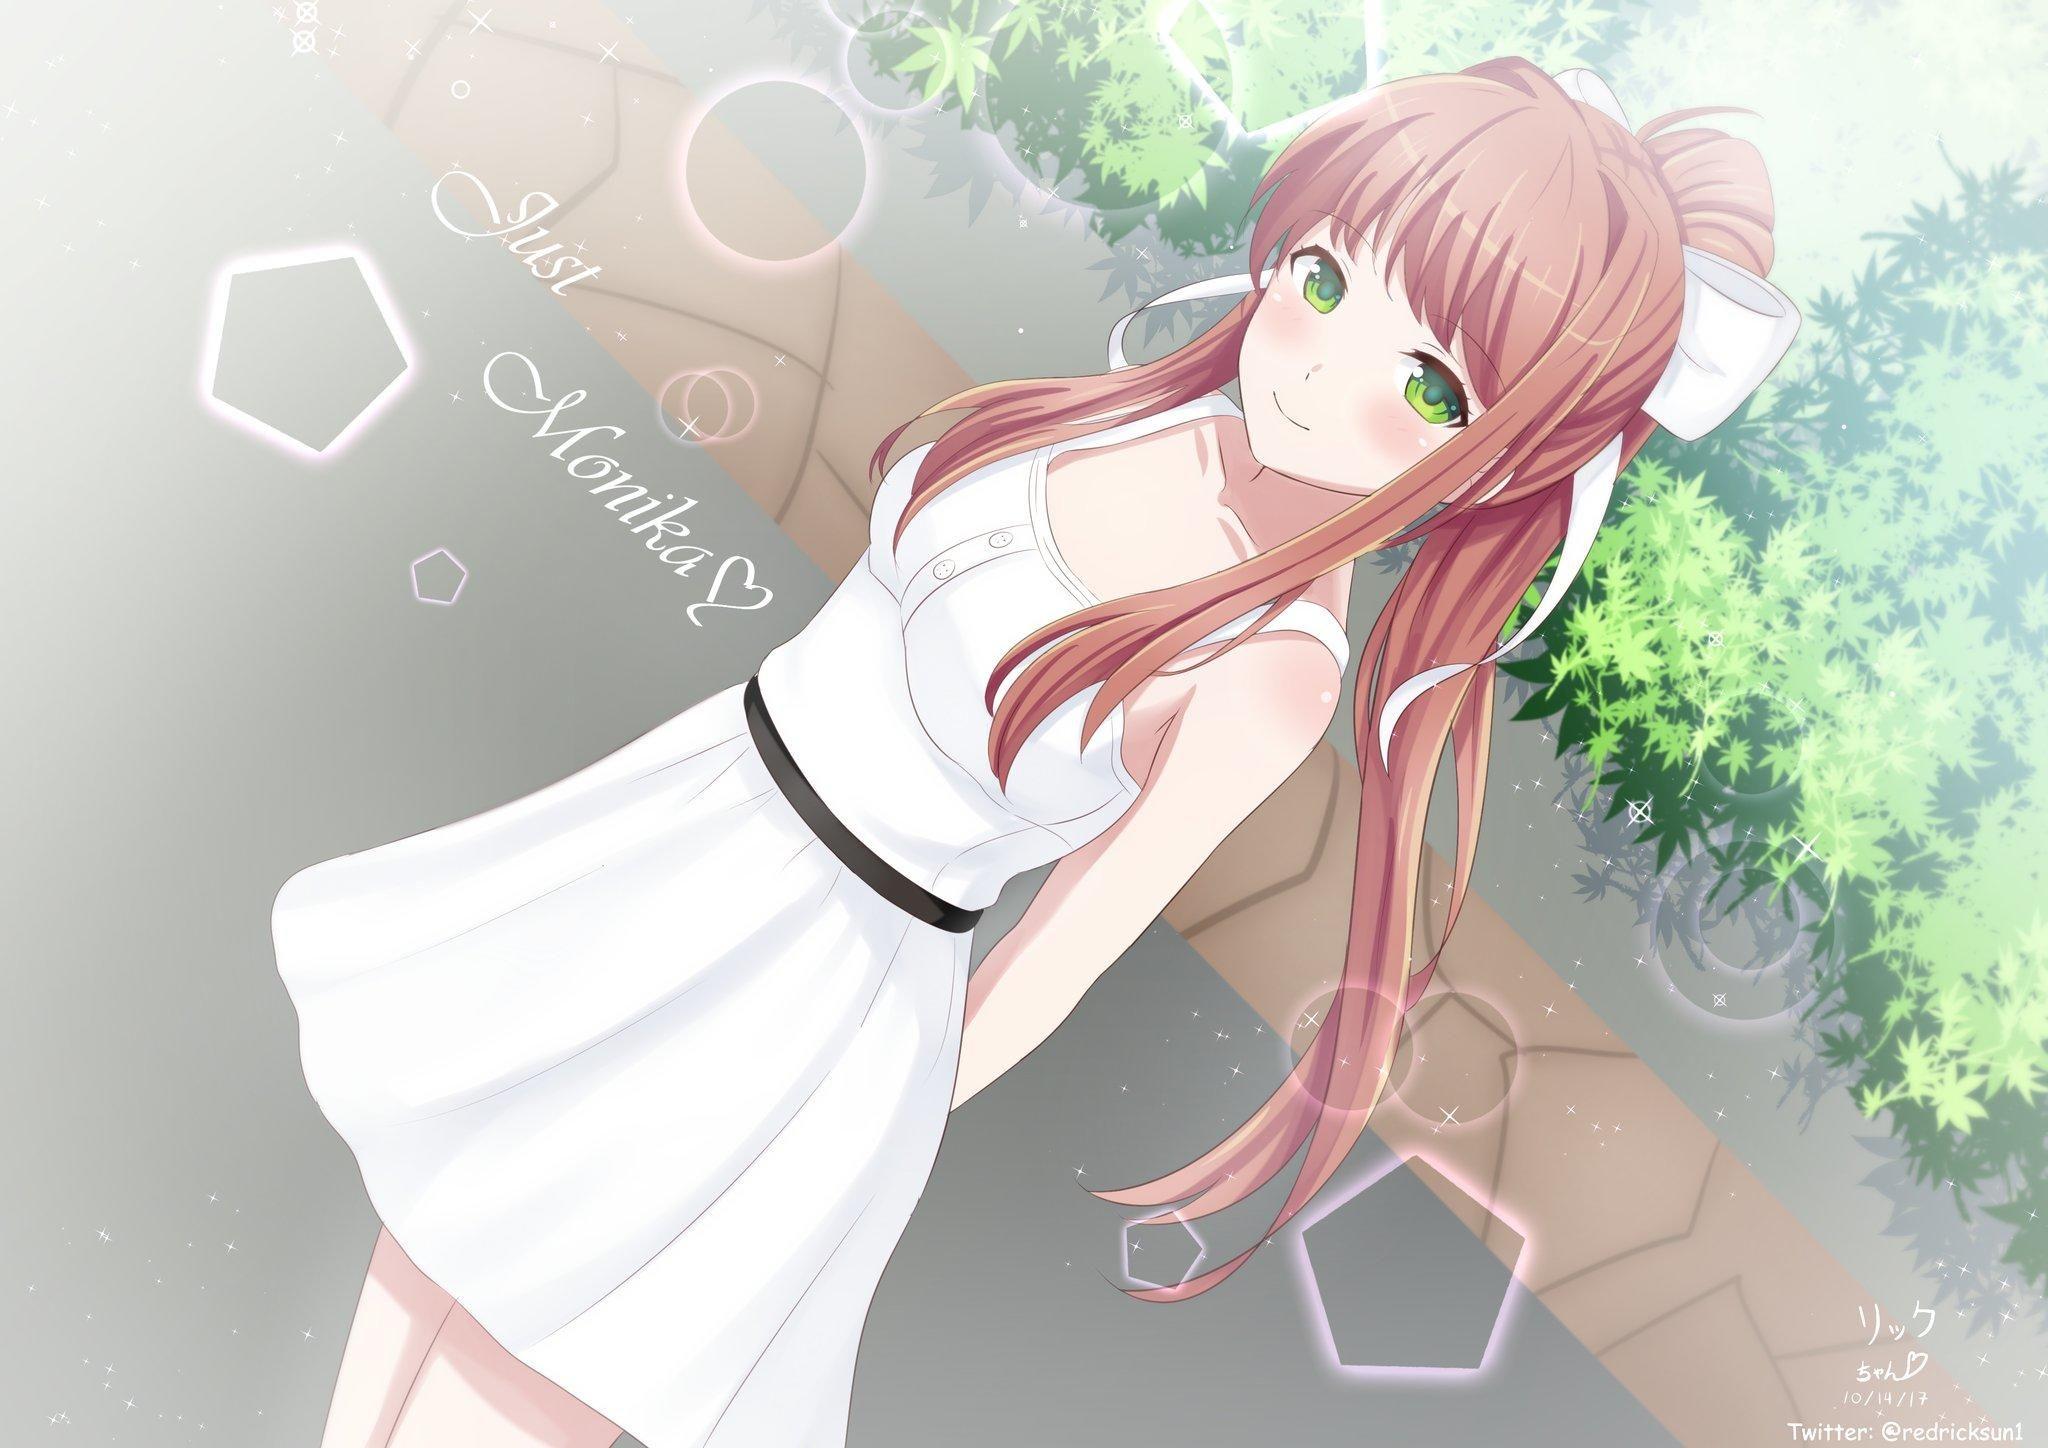 Monika in a dress. Literature, Meme and Anime